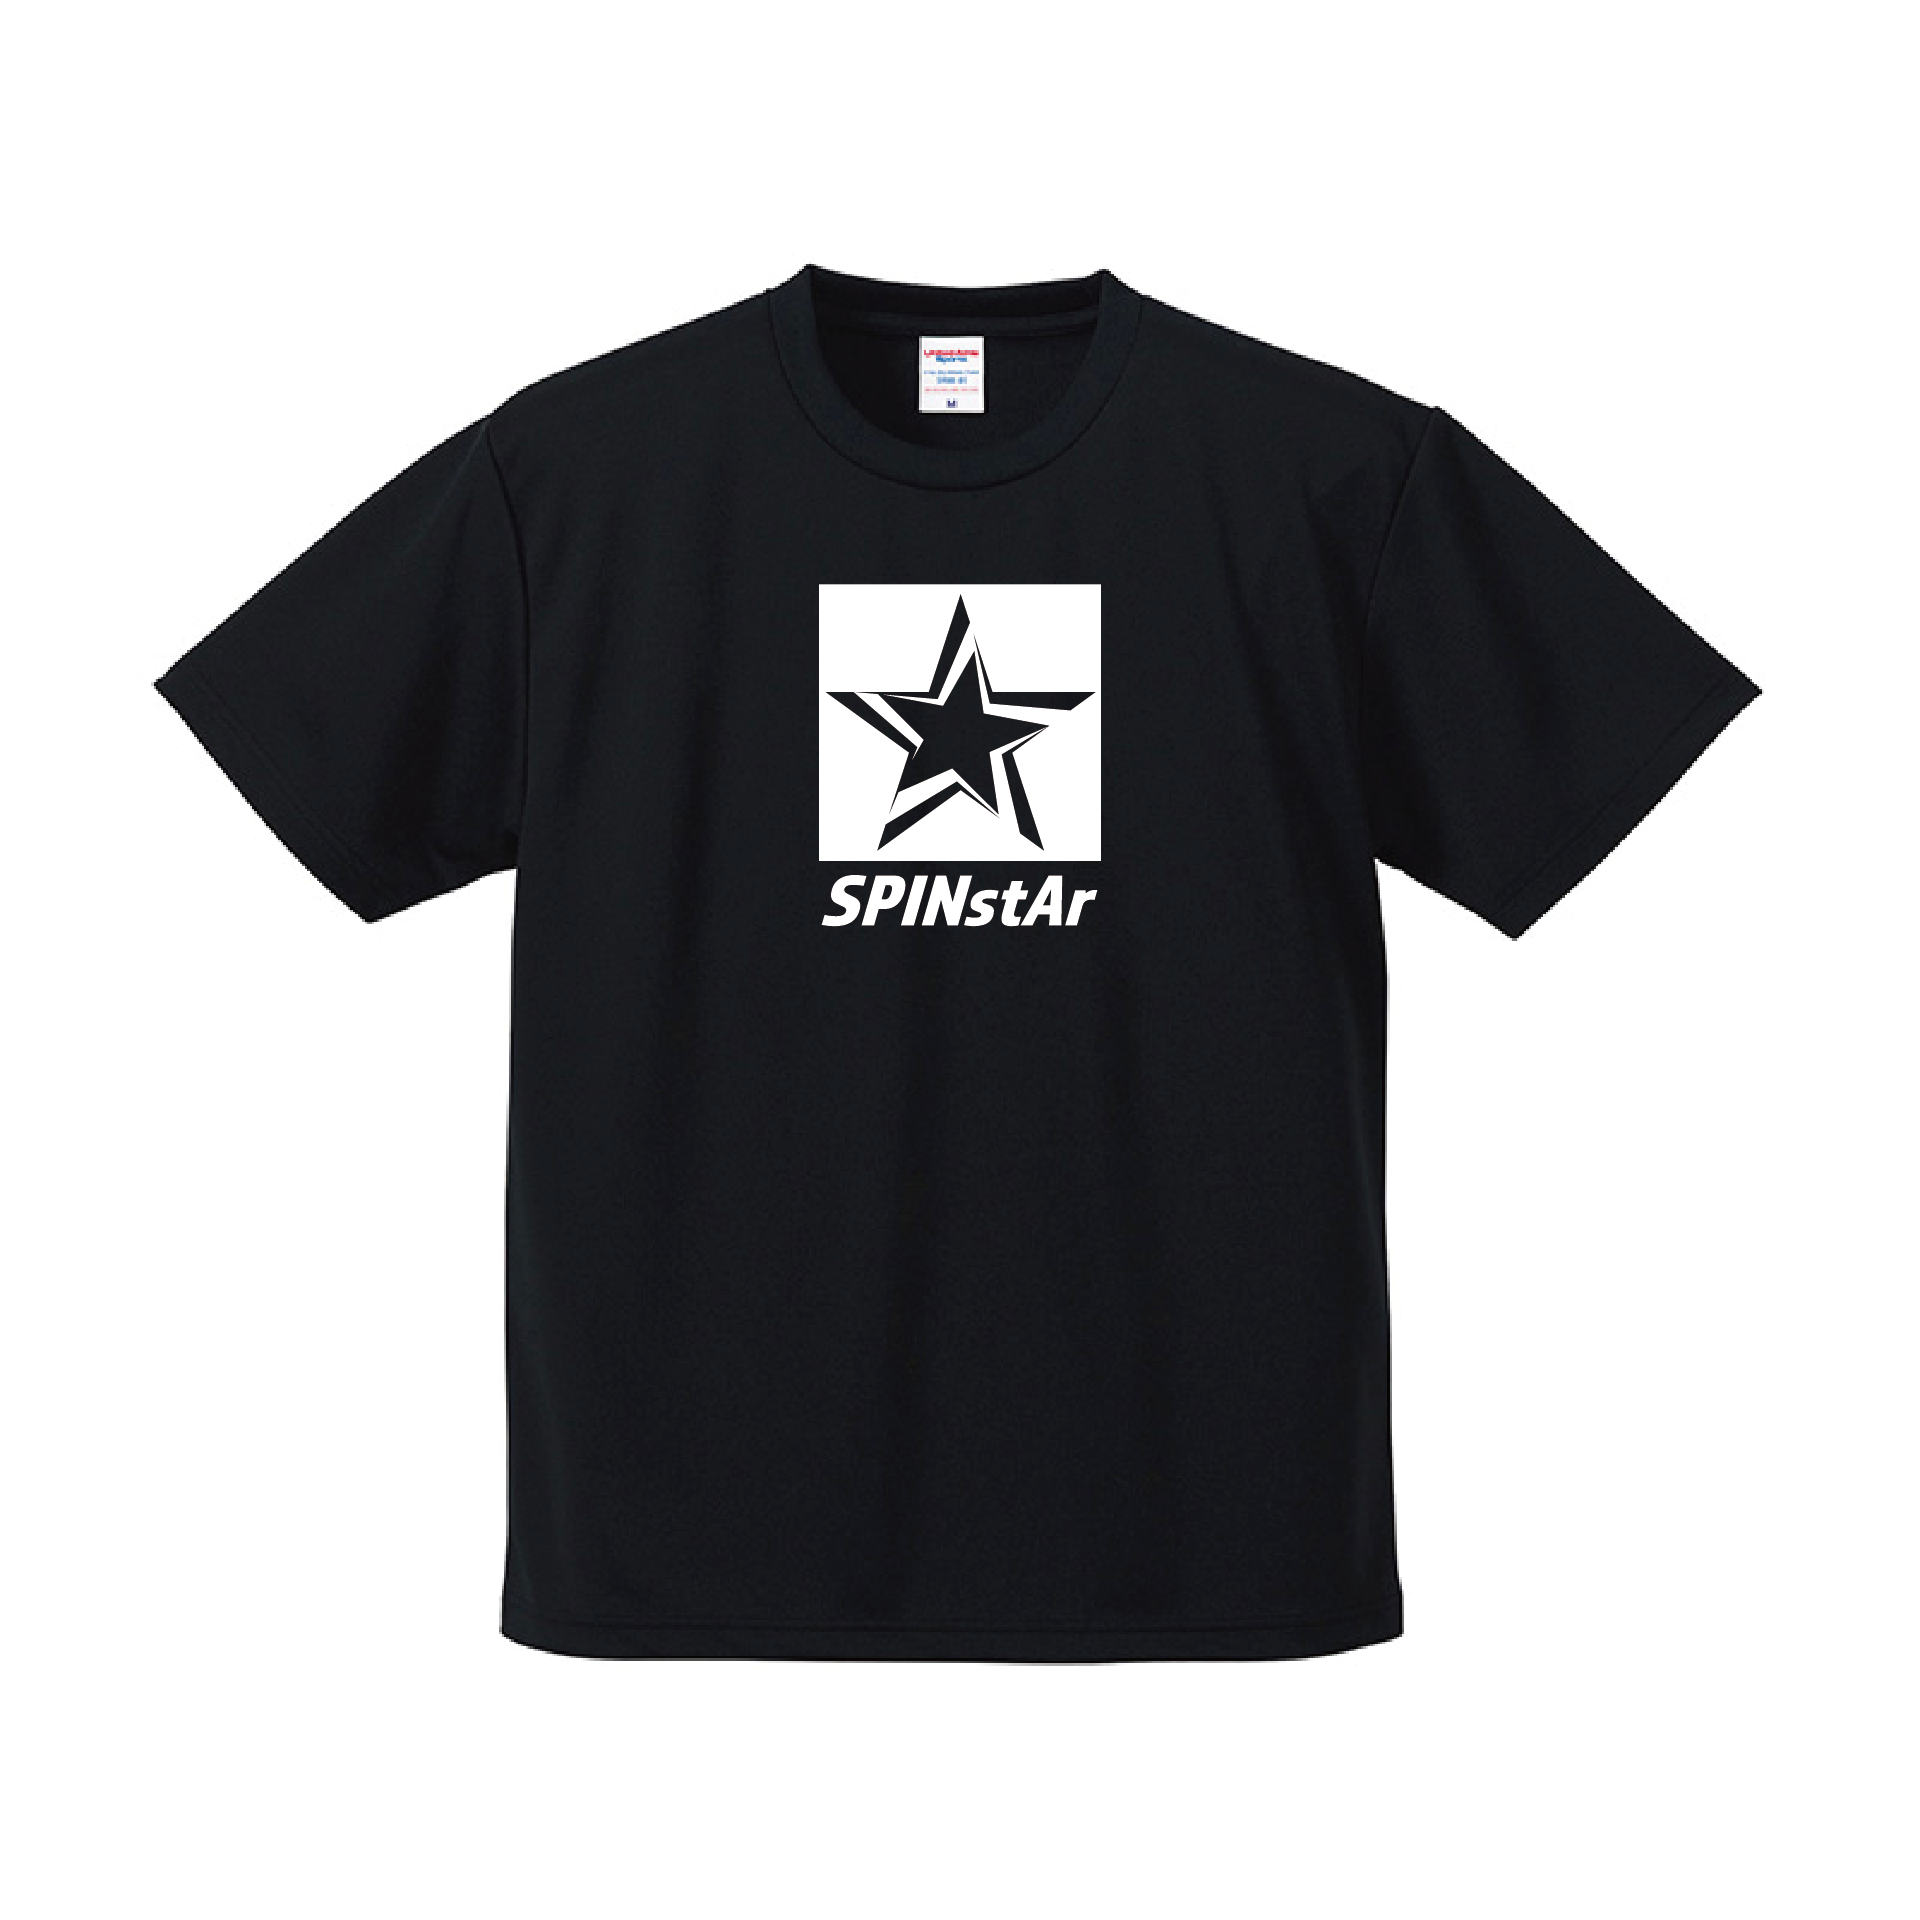 SPIN stAr T-shirts